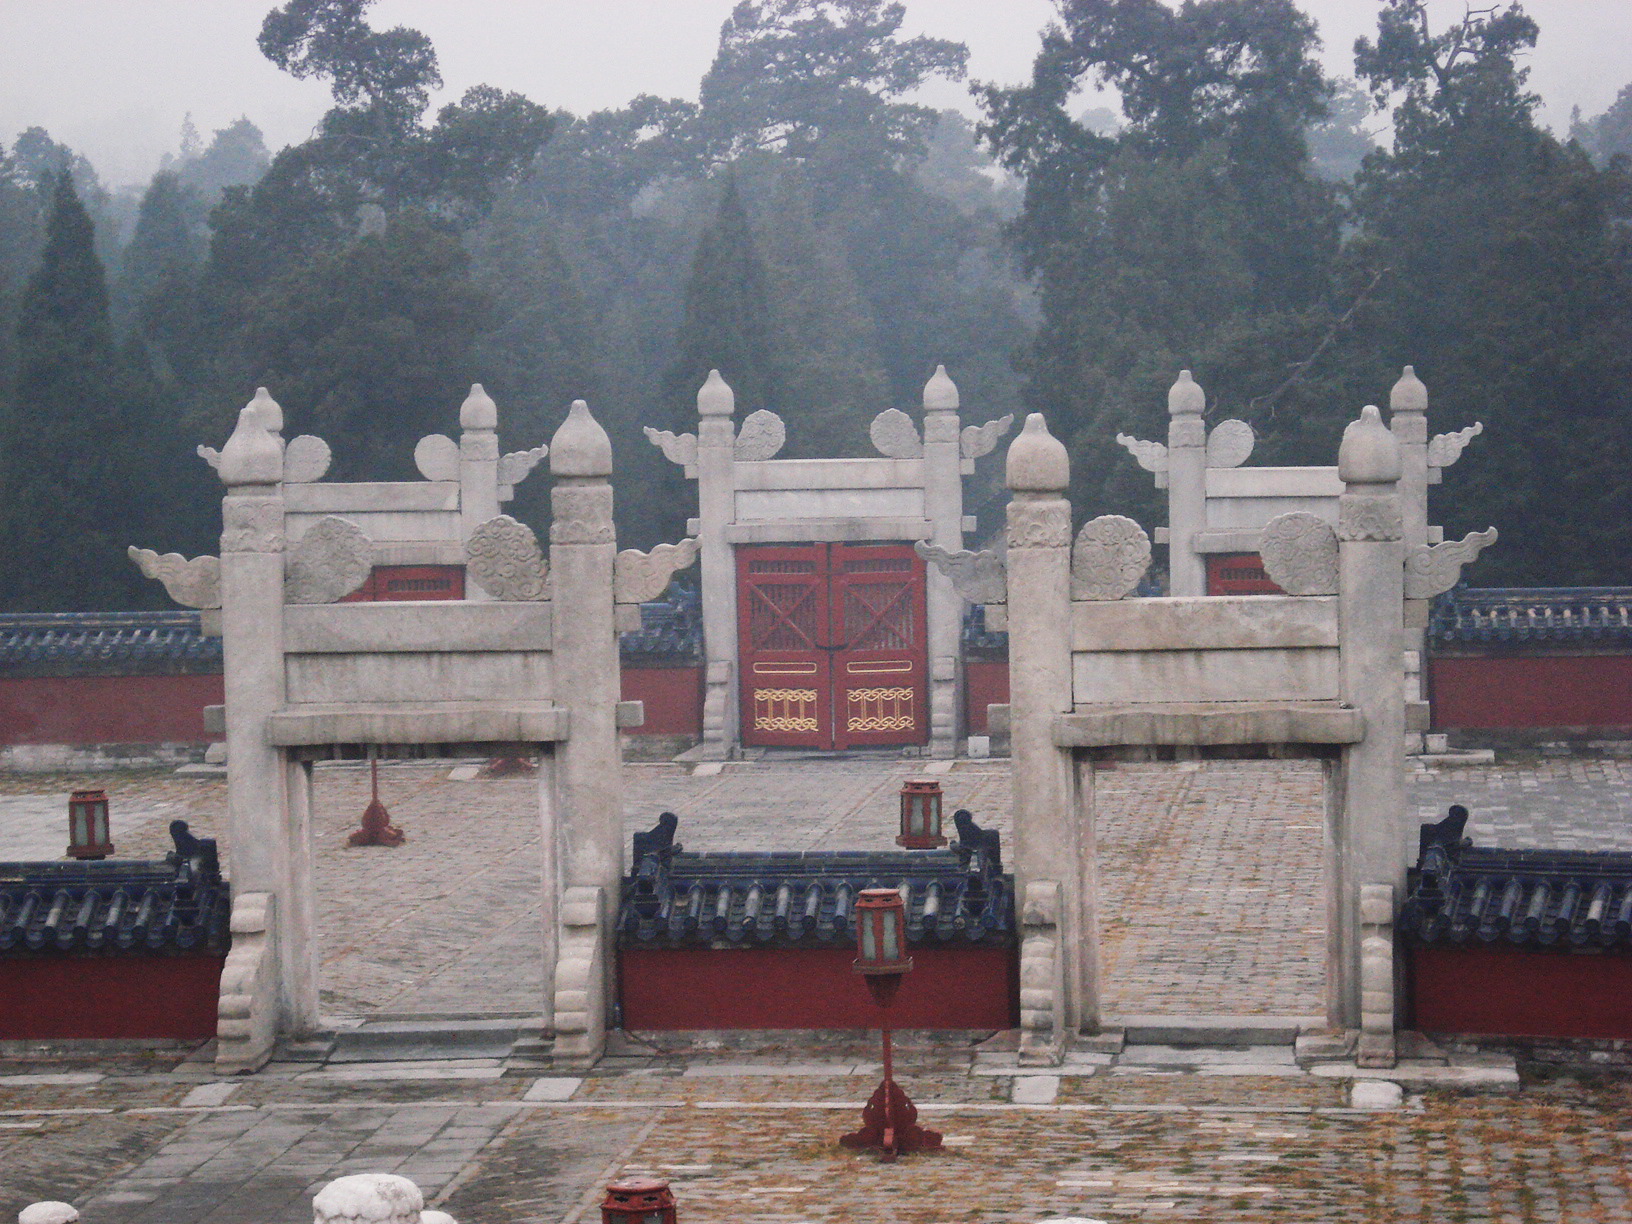 ms76-oriental gates by mystify-stock on DeviantArt